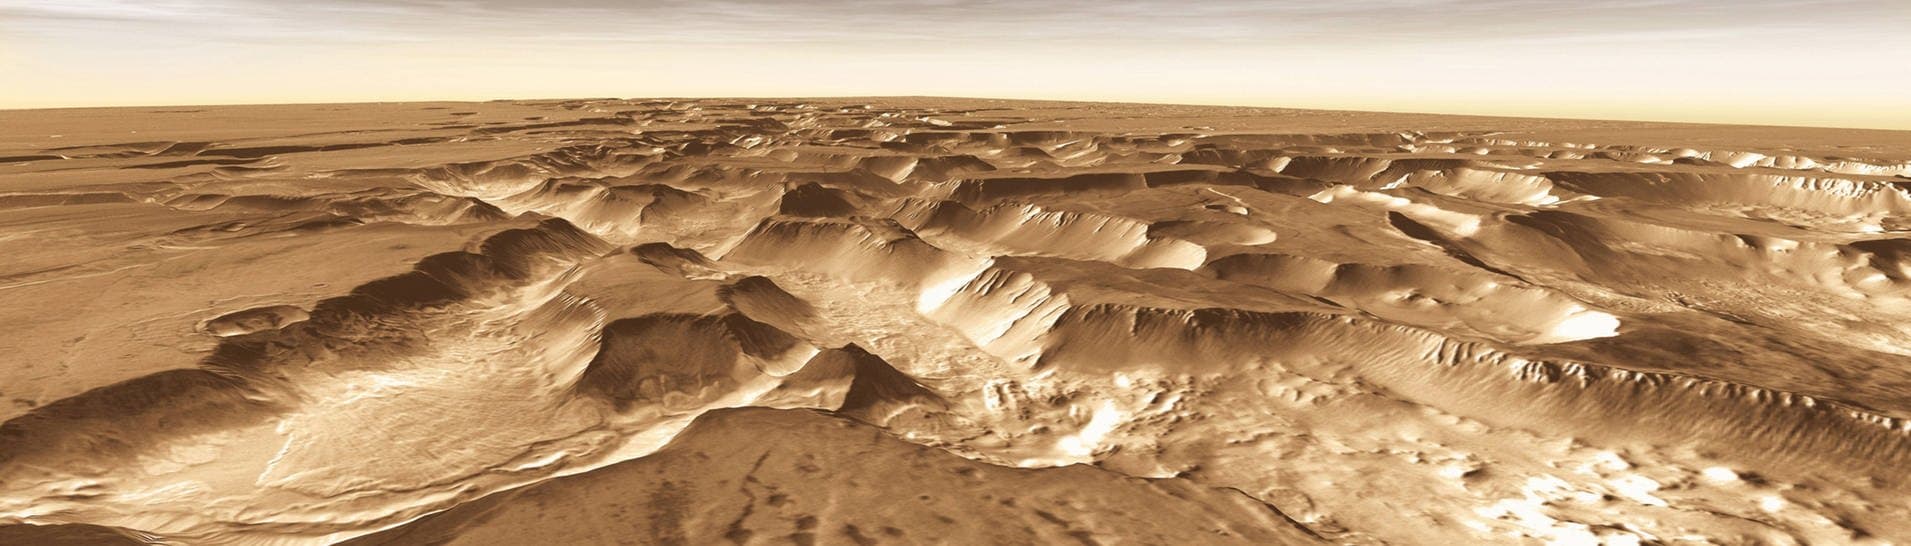 Das Grabenbruchsystem „Noctis Labyrinthus“ auf dem Mars. (Foto: IMAGO, Imago / United Archives International)